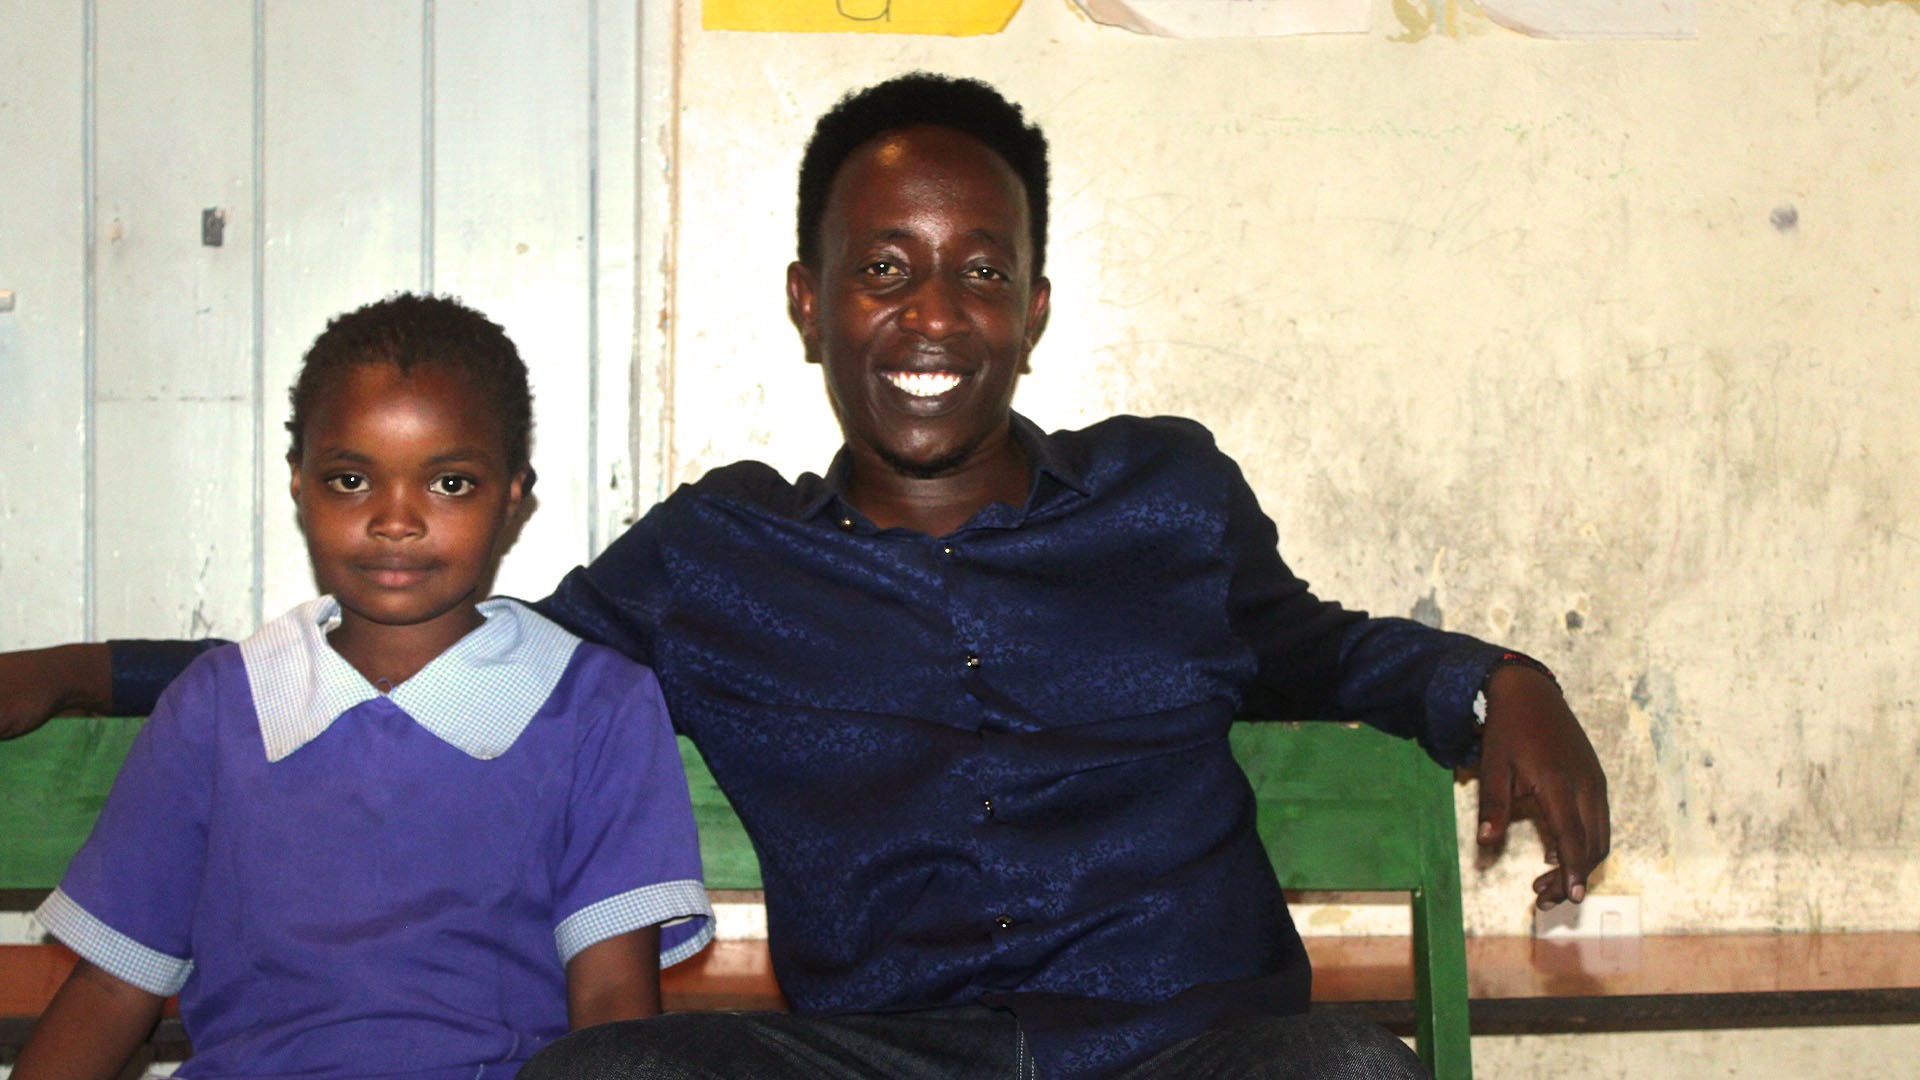 Ashford Njonjo Muiriru with one of the kids he is sponsoring